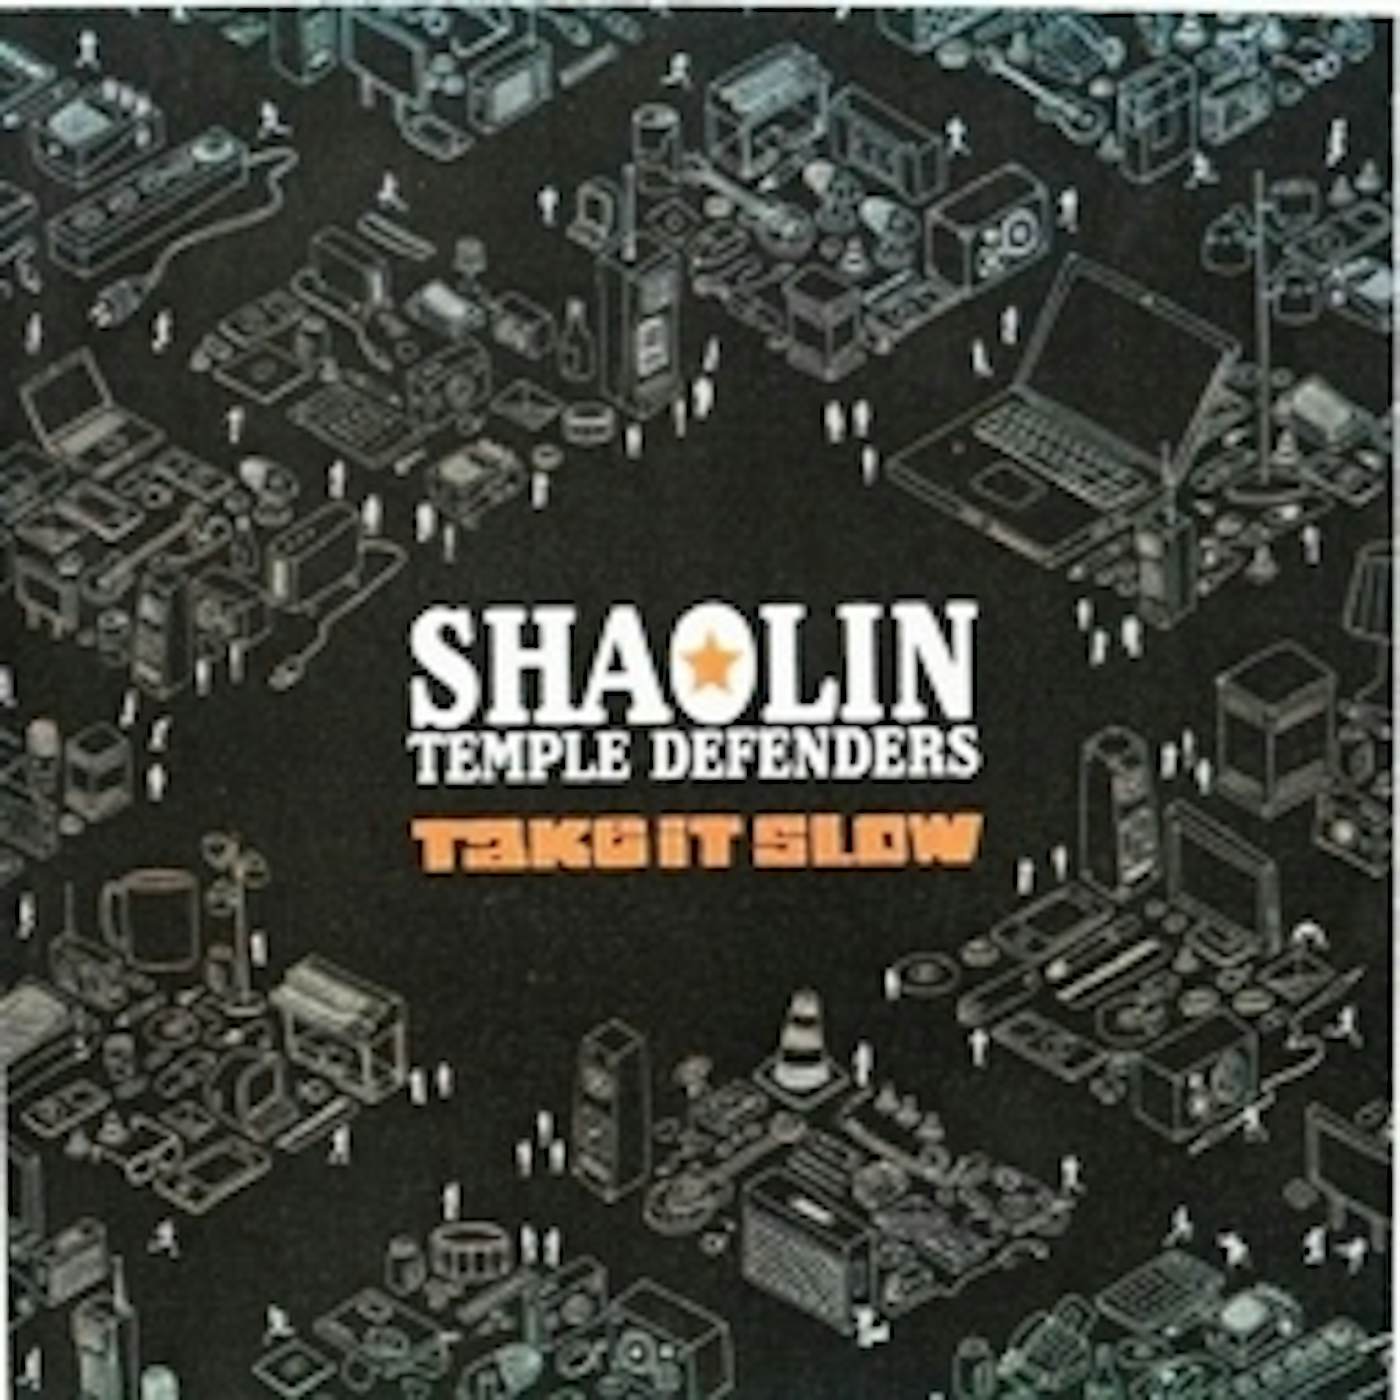 Shaolin Temple Defenders Take It Slow Vinyl Record